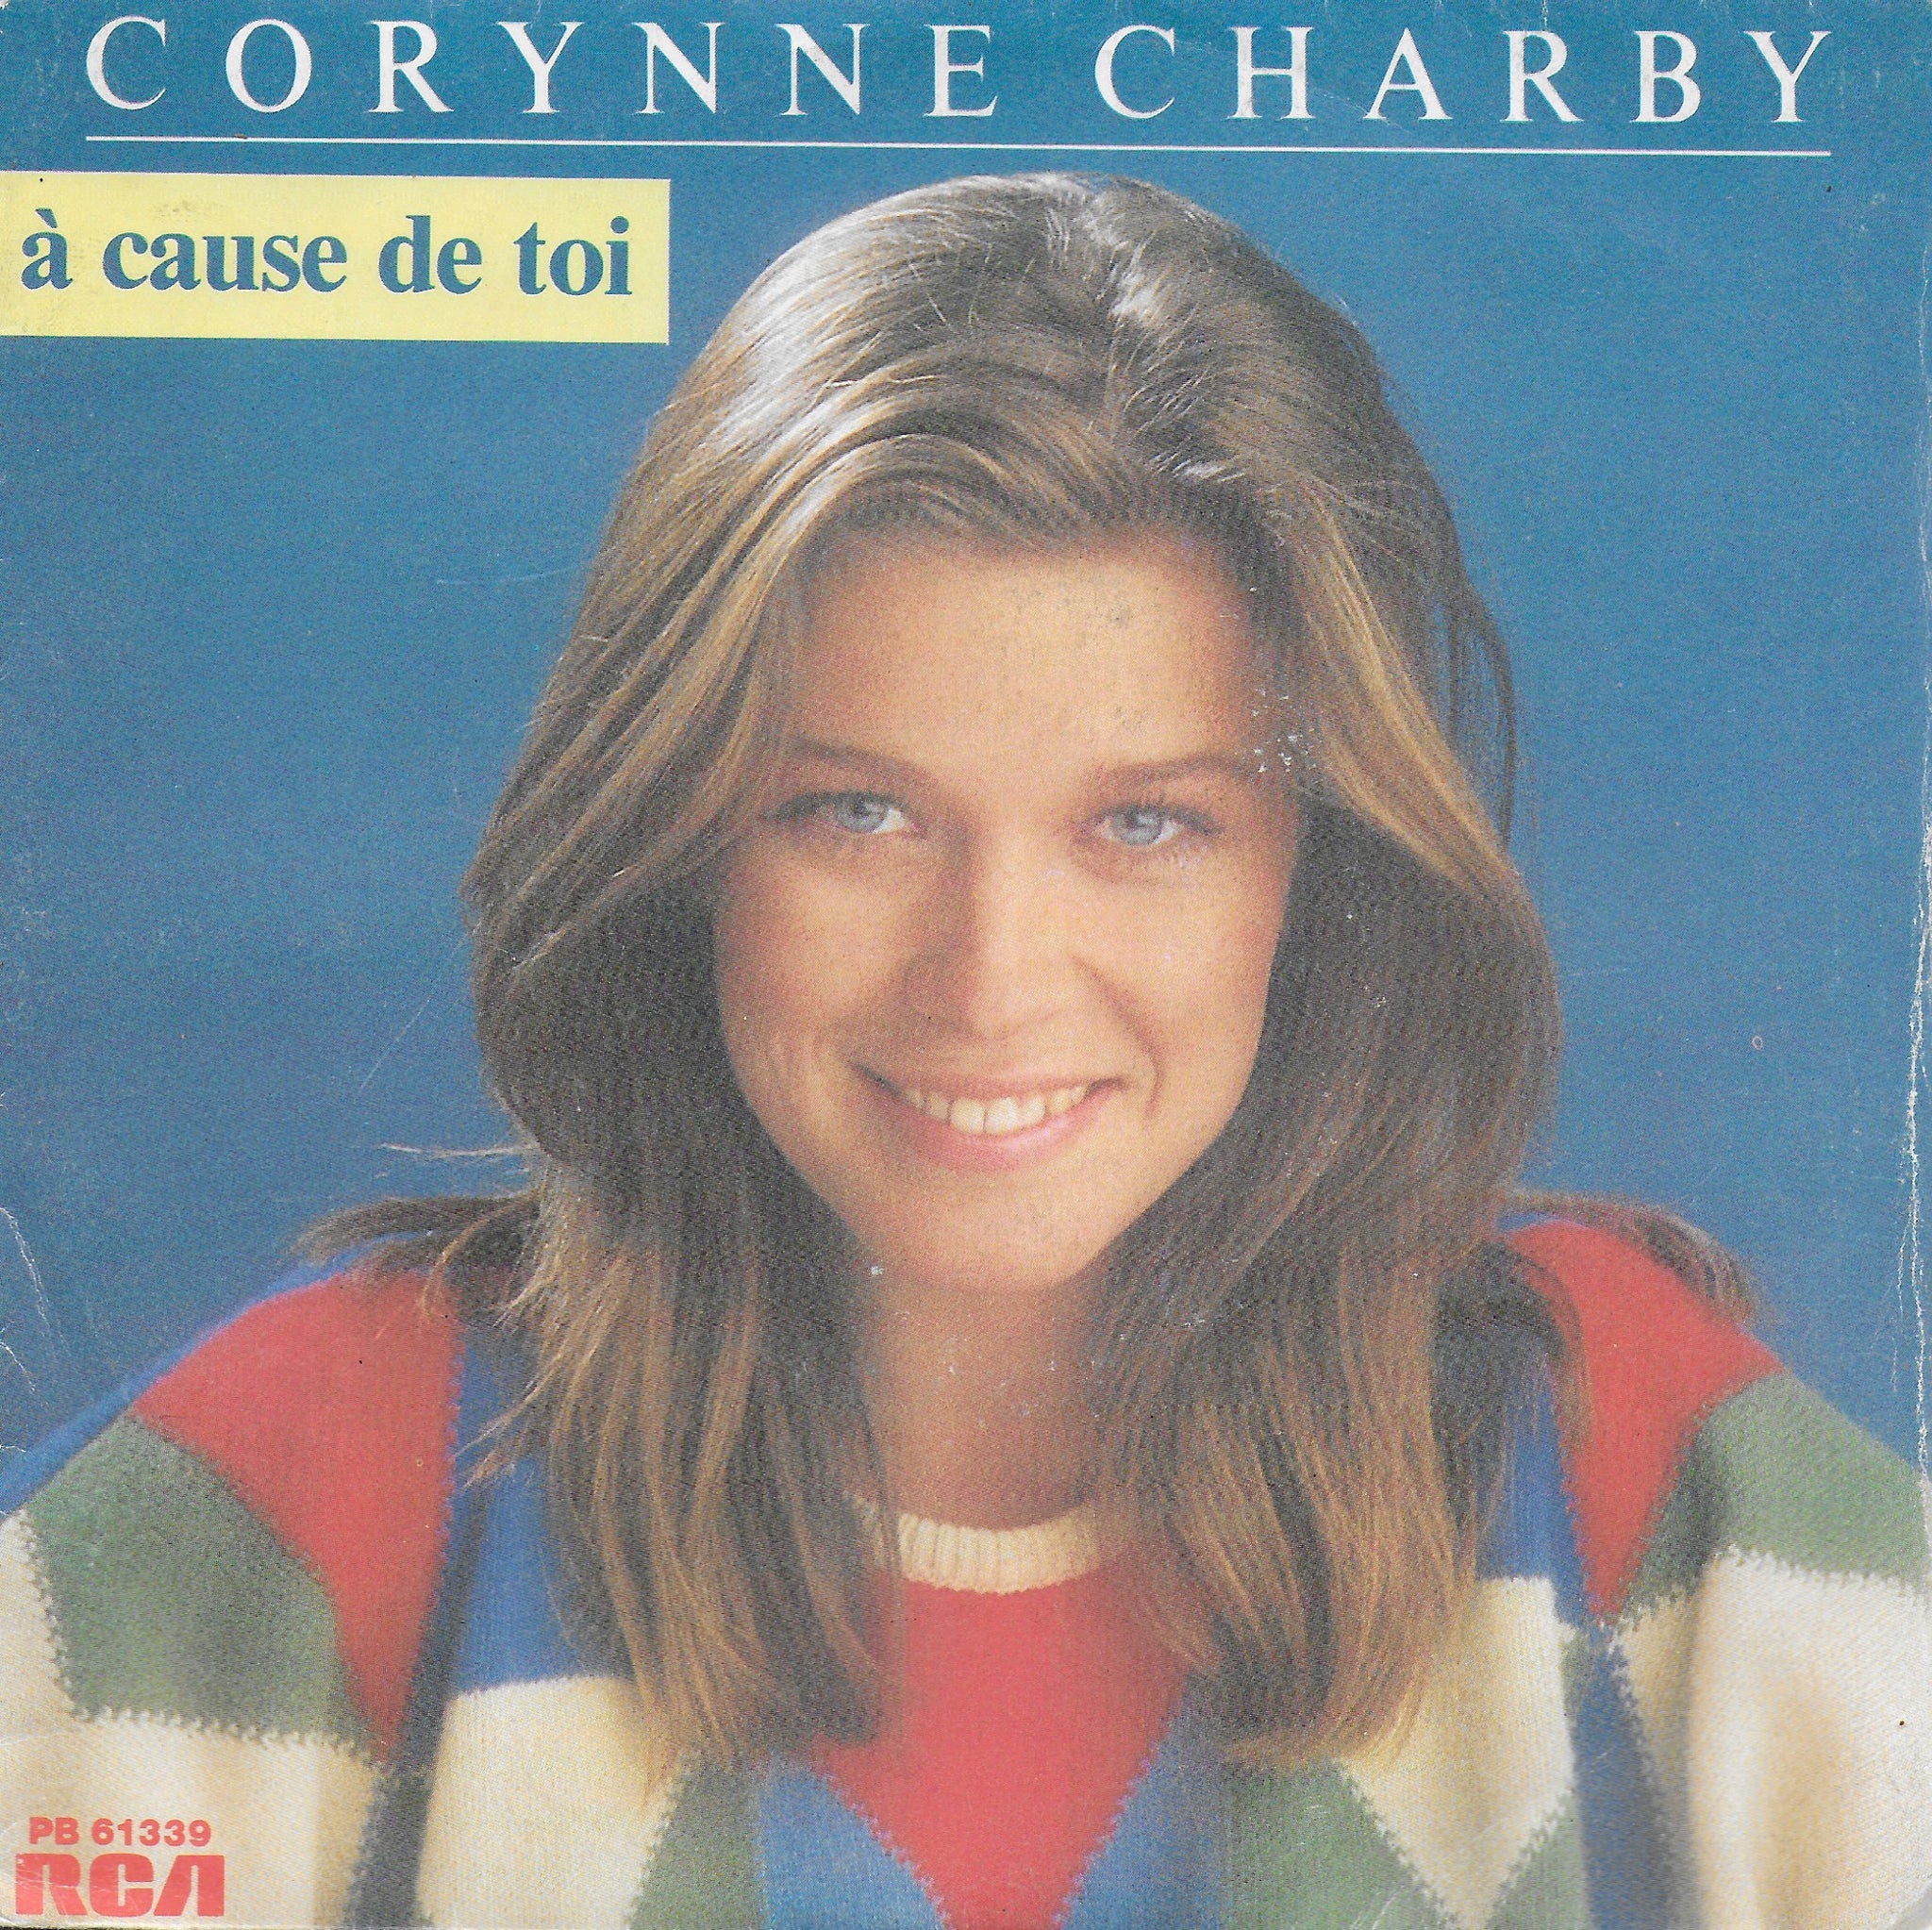 Corynne Charby - A cause de toi